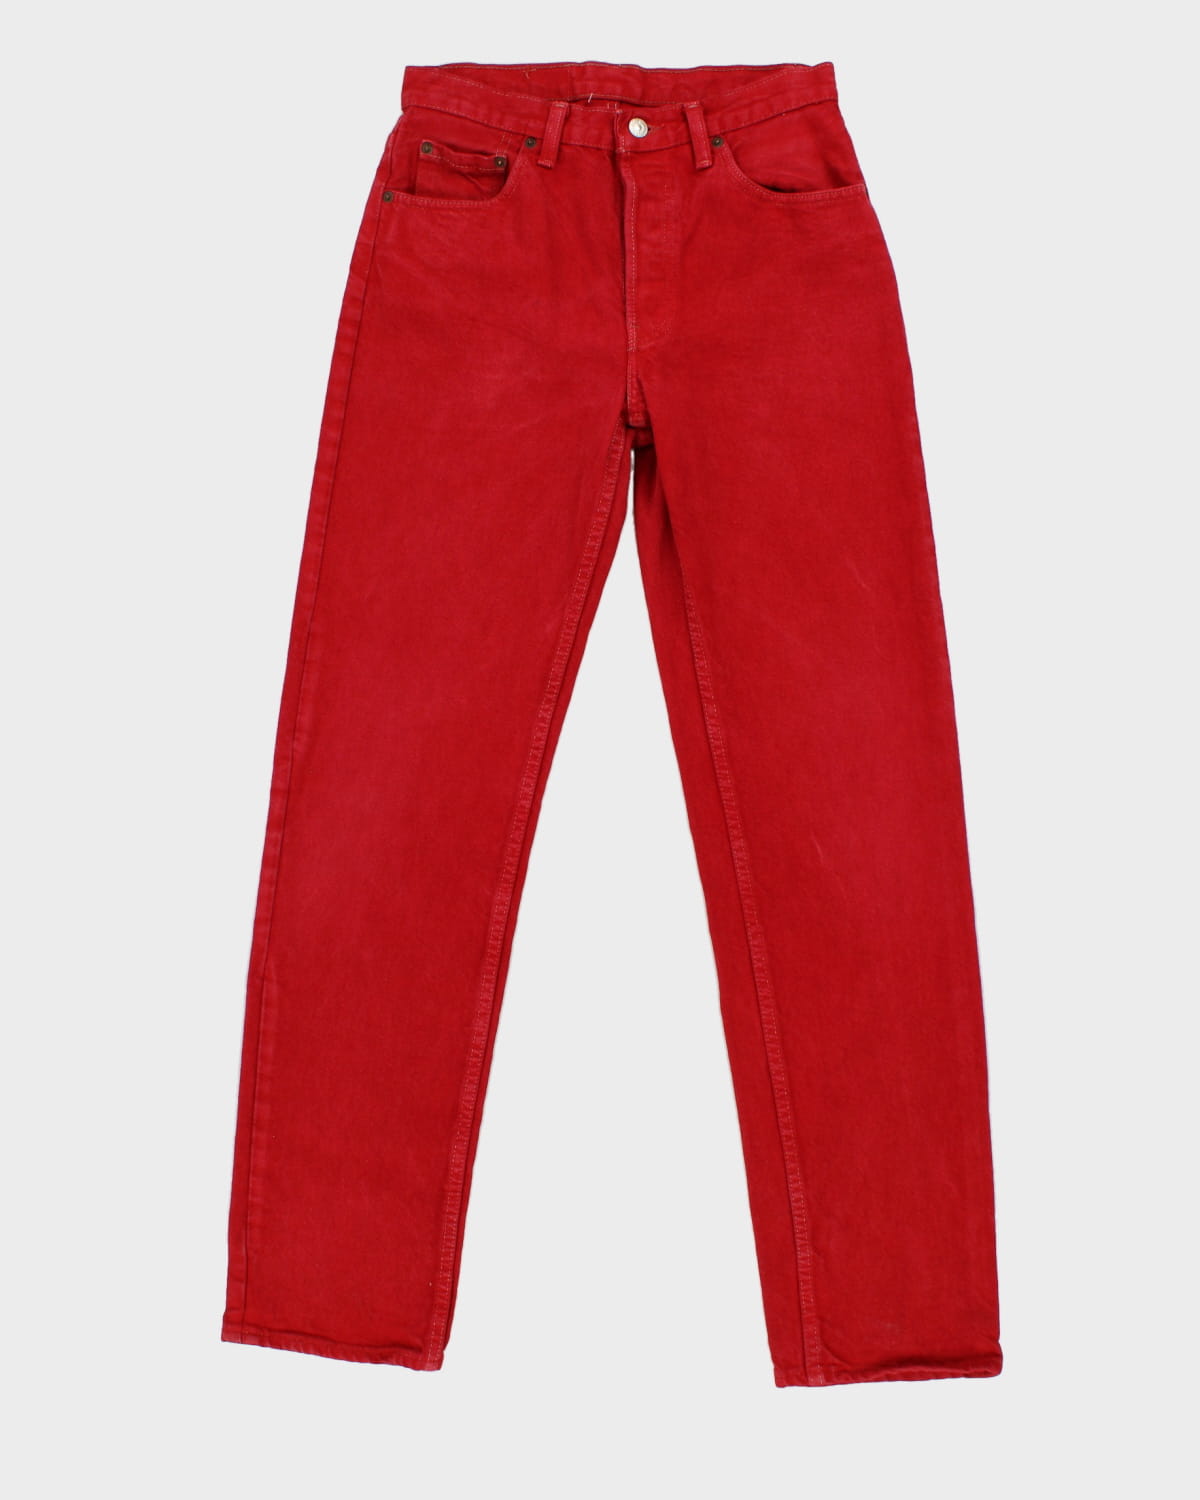 Vintage Levi's 501 Red Jeans - W30 L32 – Rokit